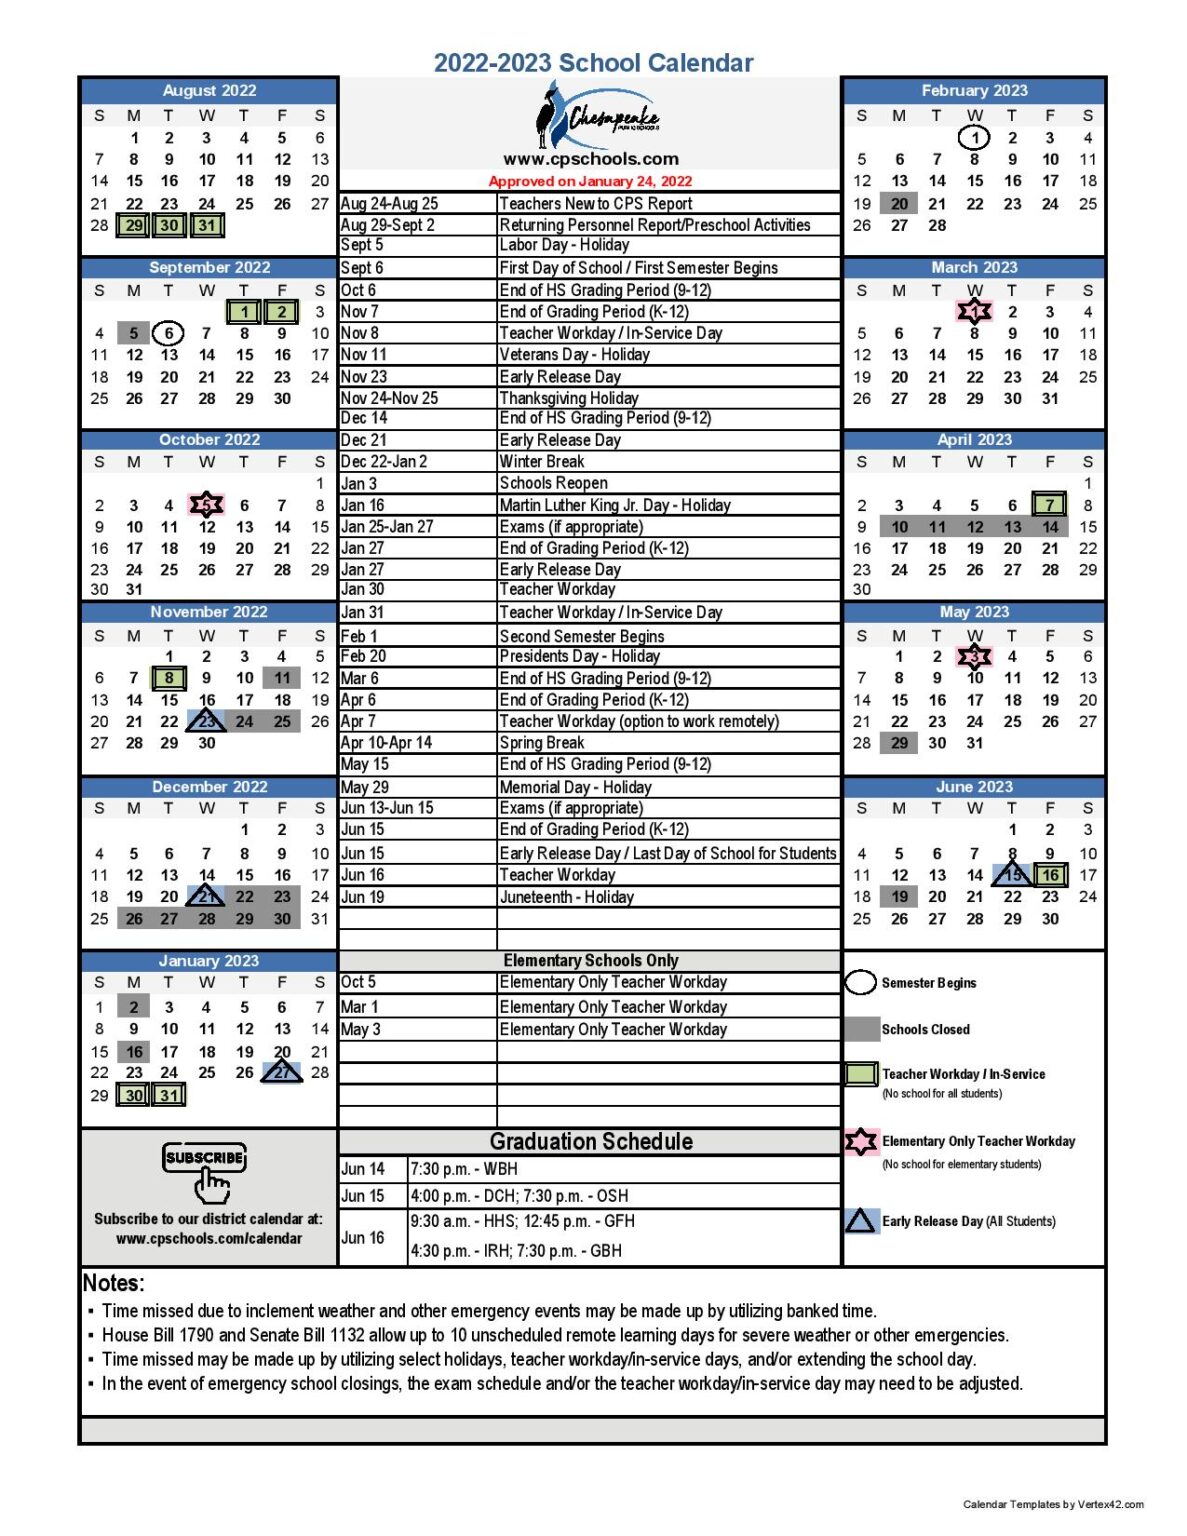 Chesapeake Public Schools Calendar 2022 23